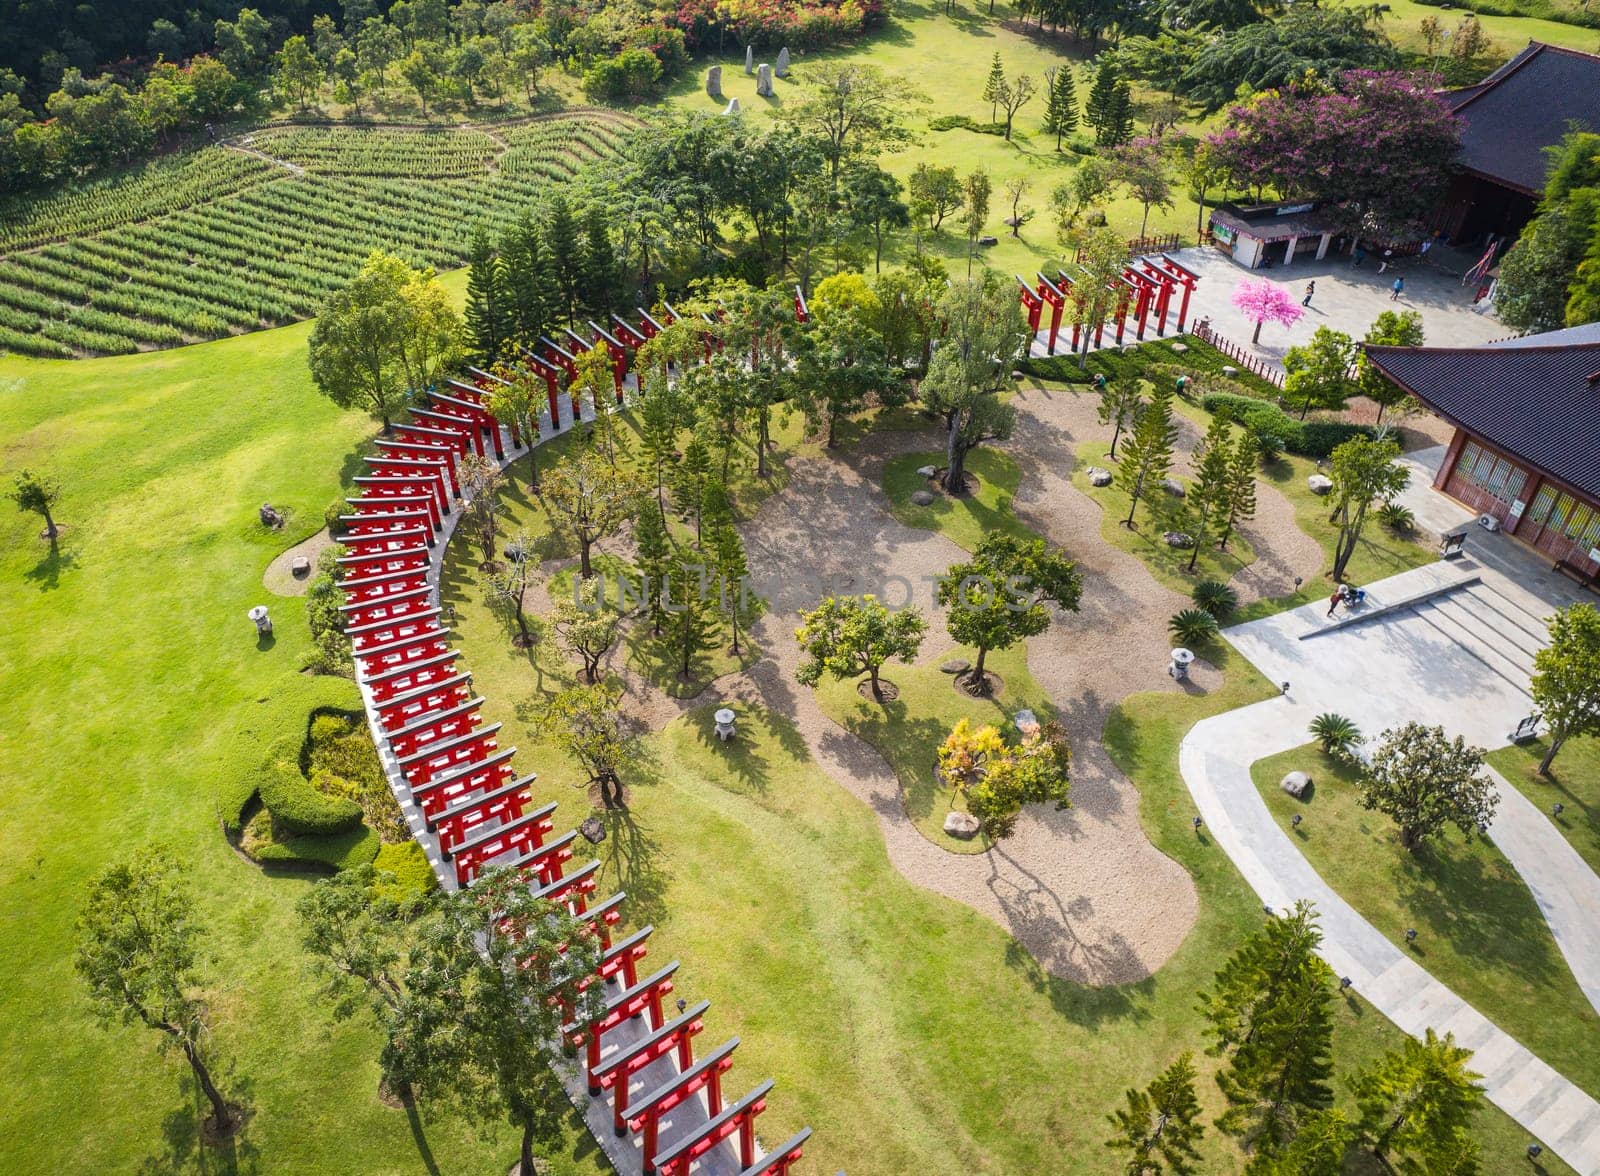 Aerial views of Japanese theme park Hinoki Land in Chai Prakan District, Chiang Mai, Thailand by worldpitou